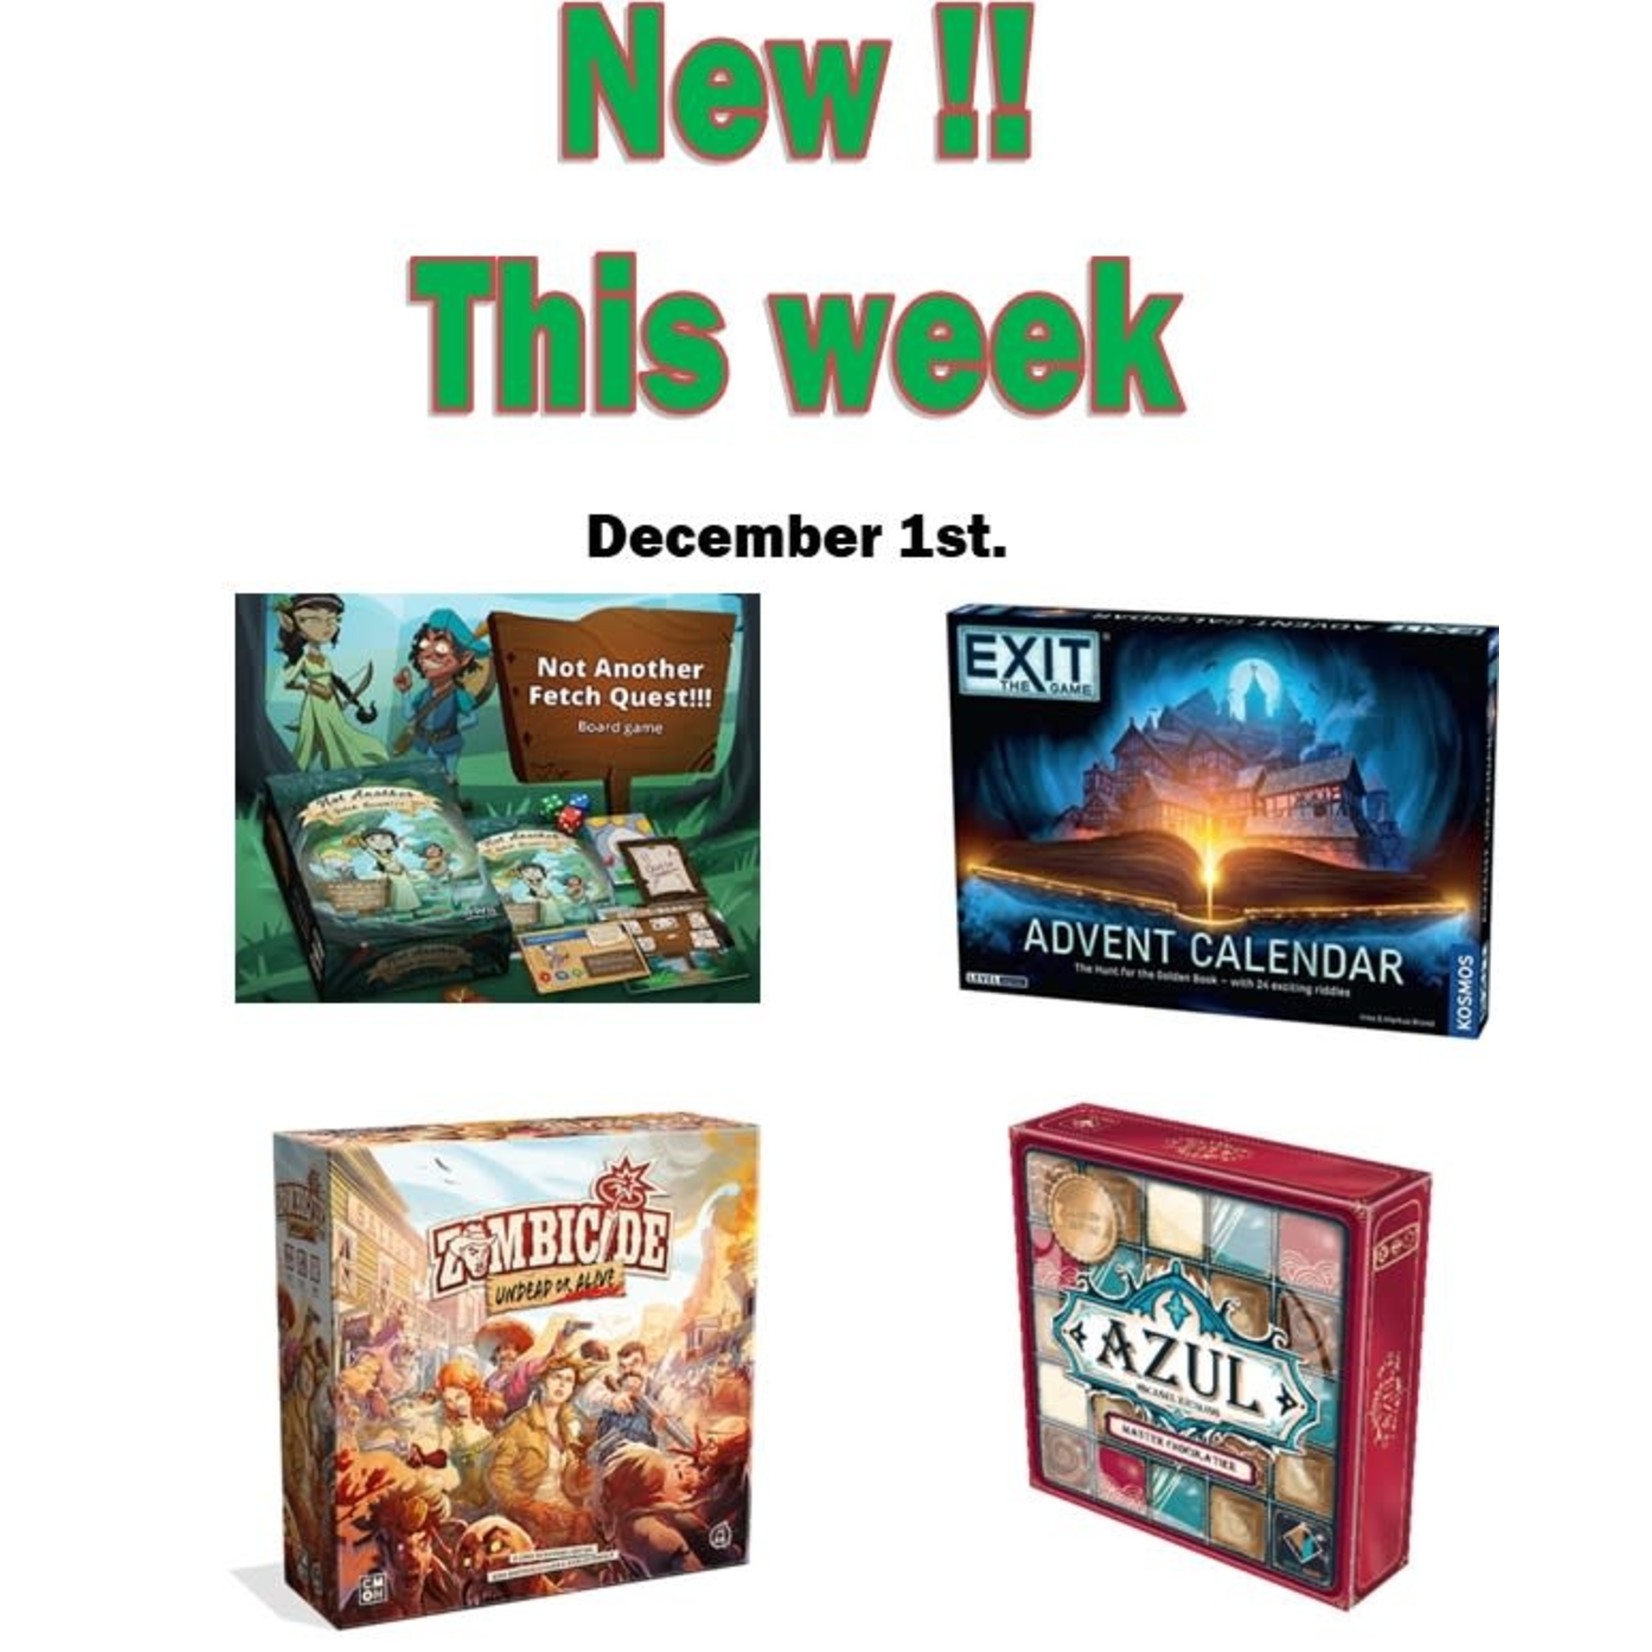 New this week - December 1st